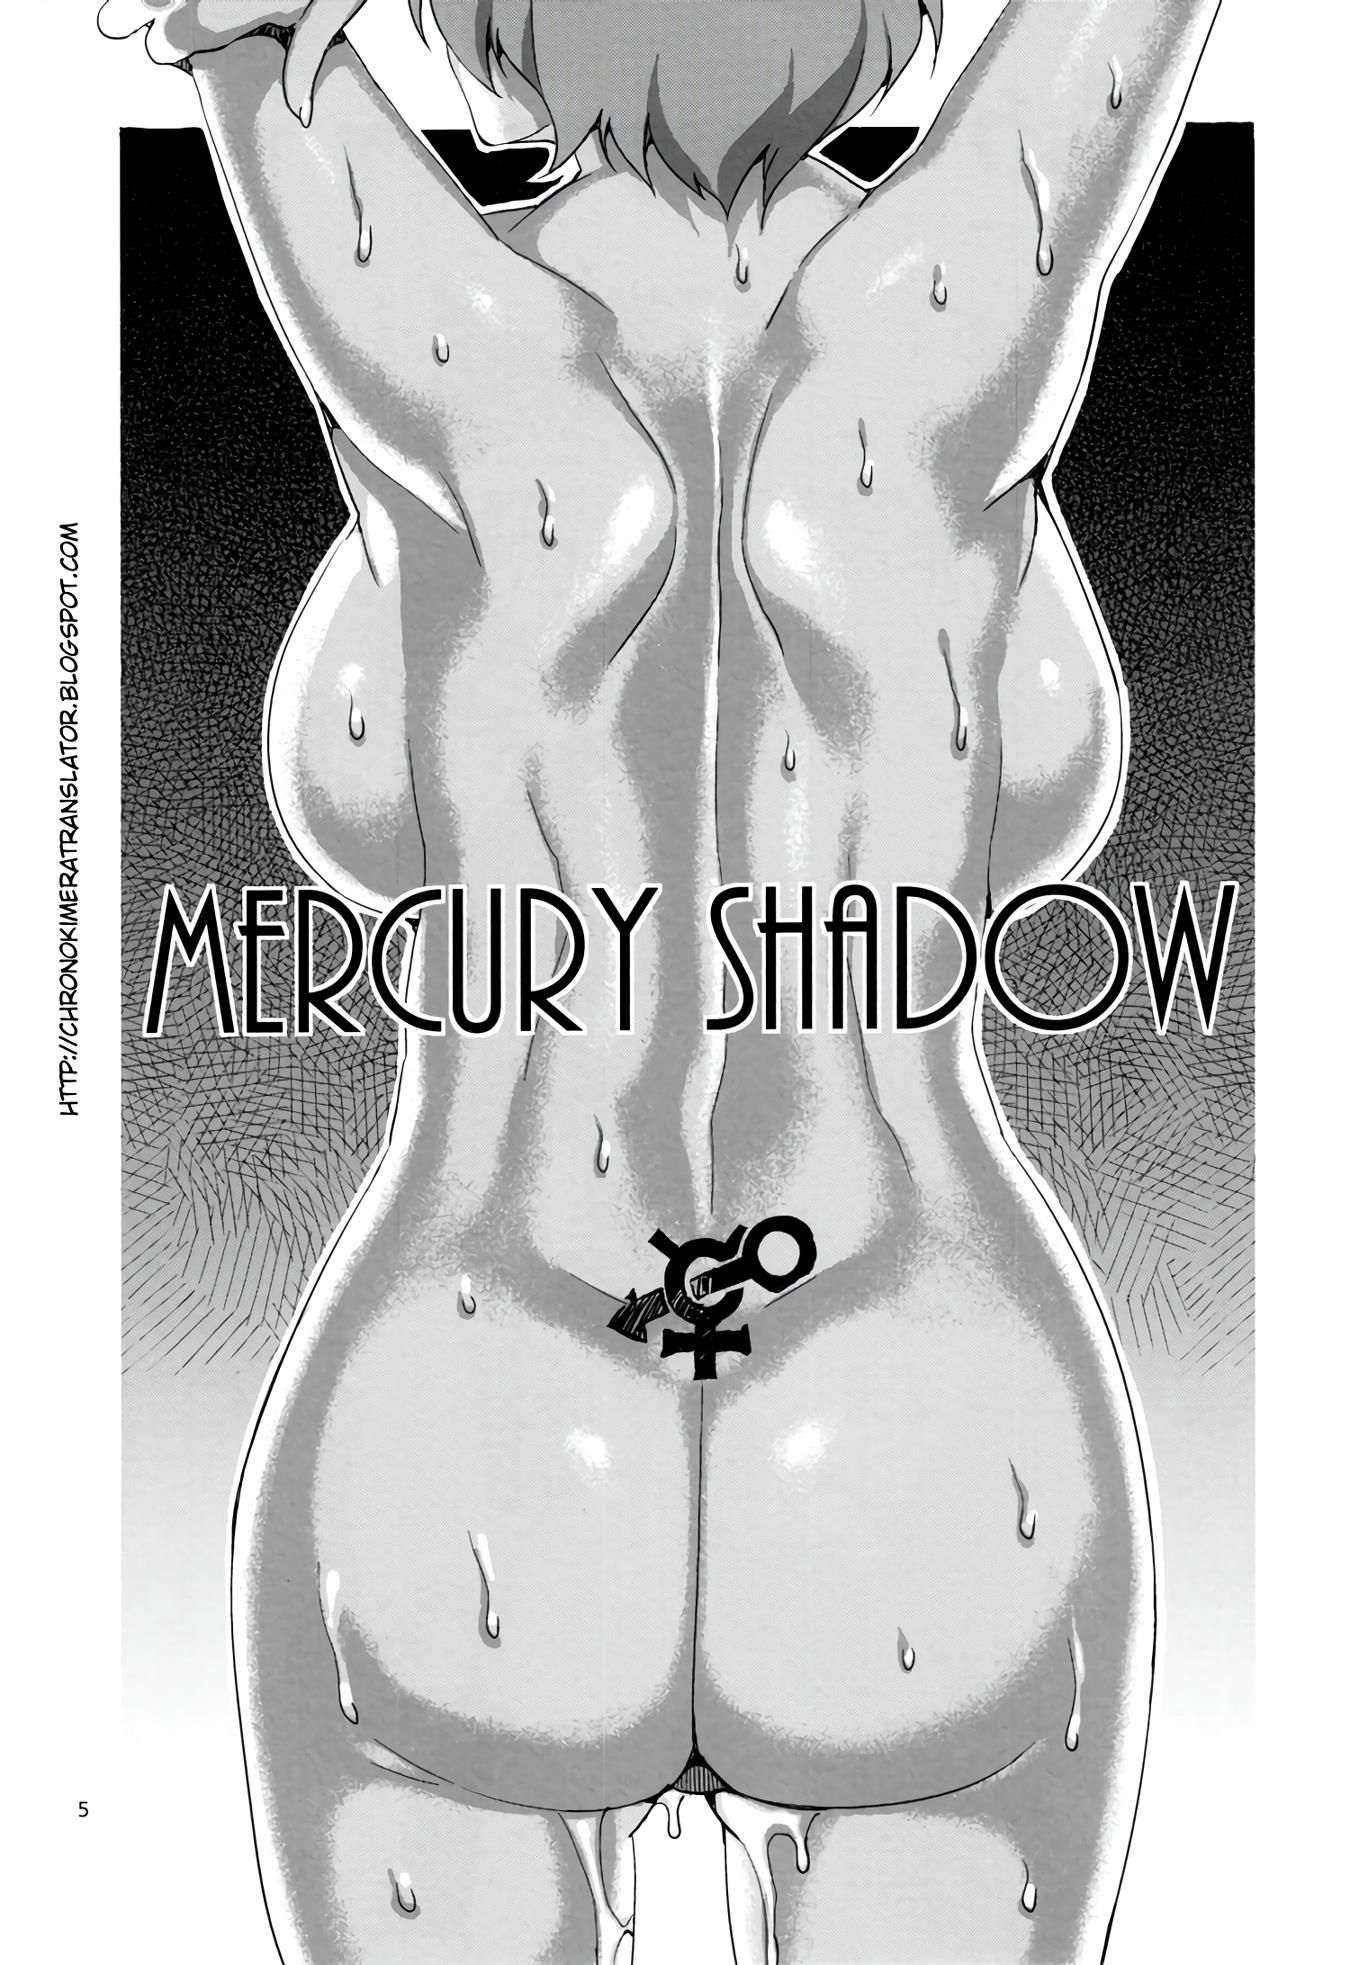 Mercury Shadow